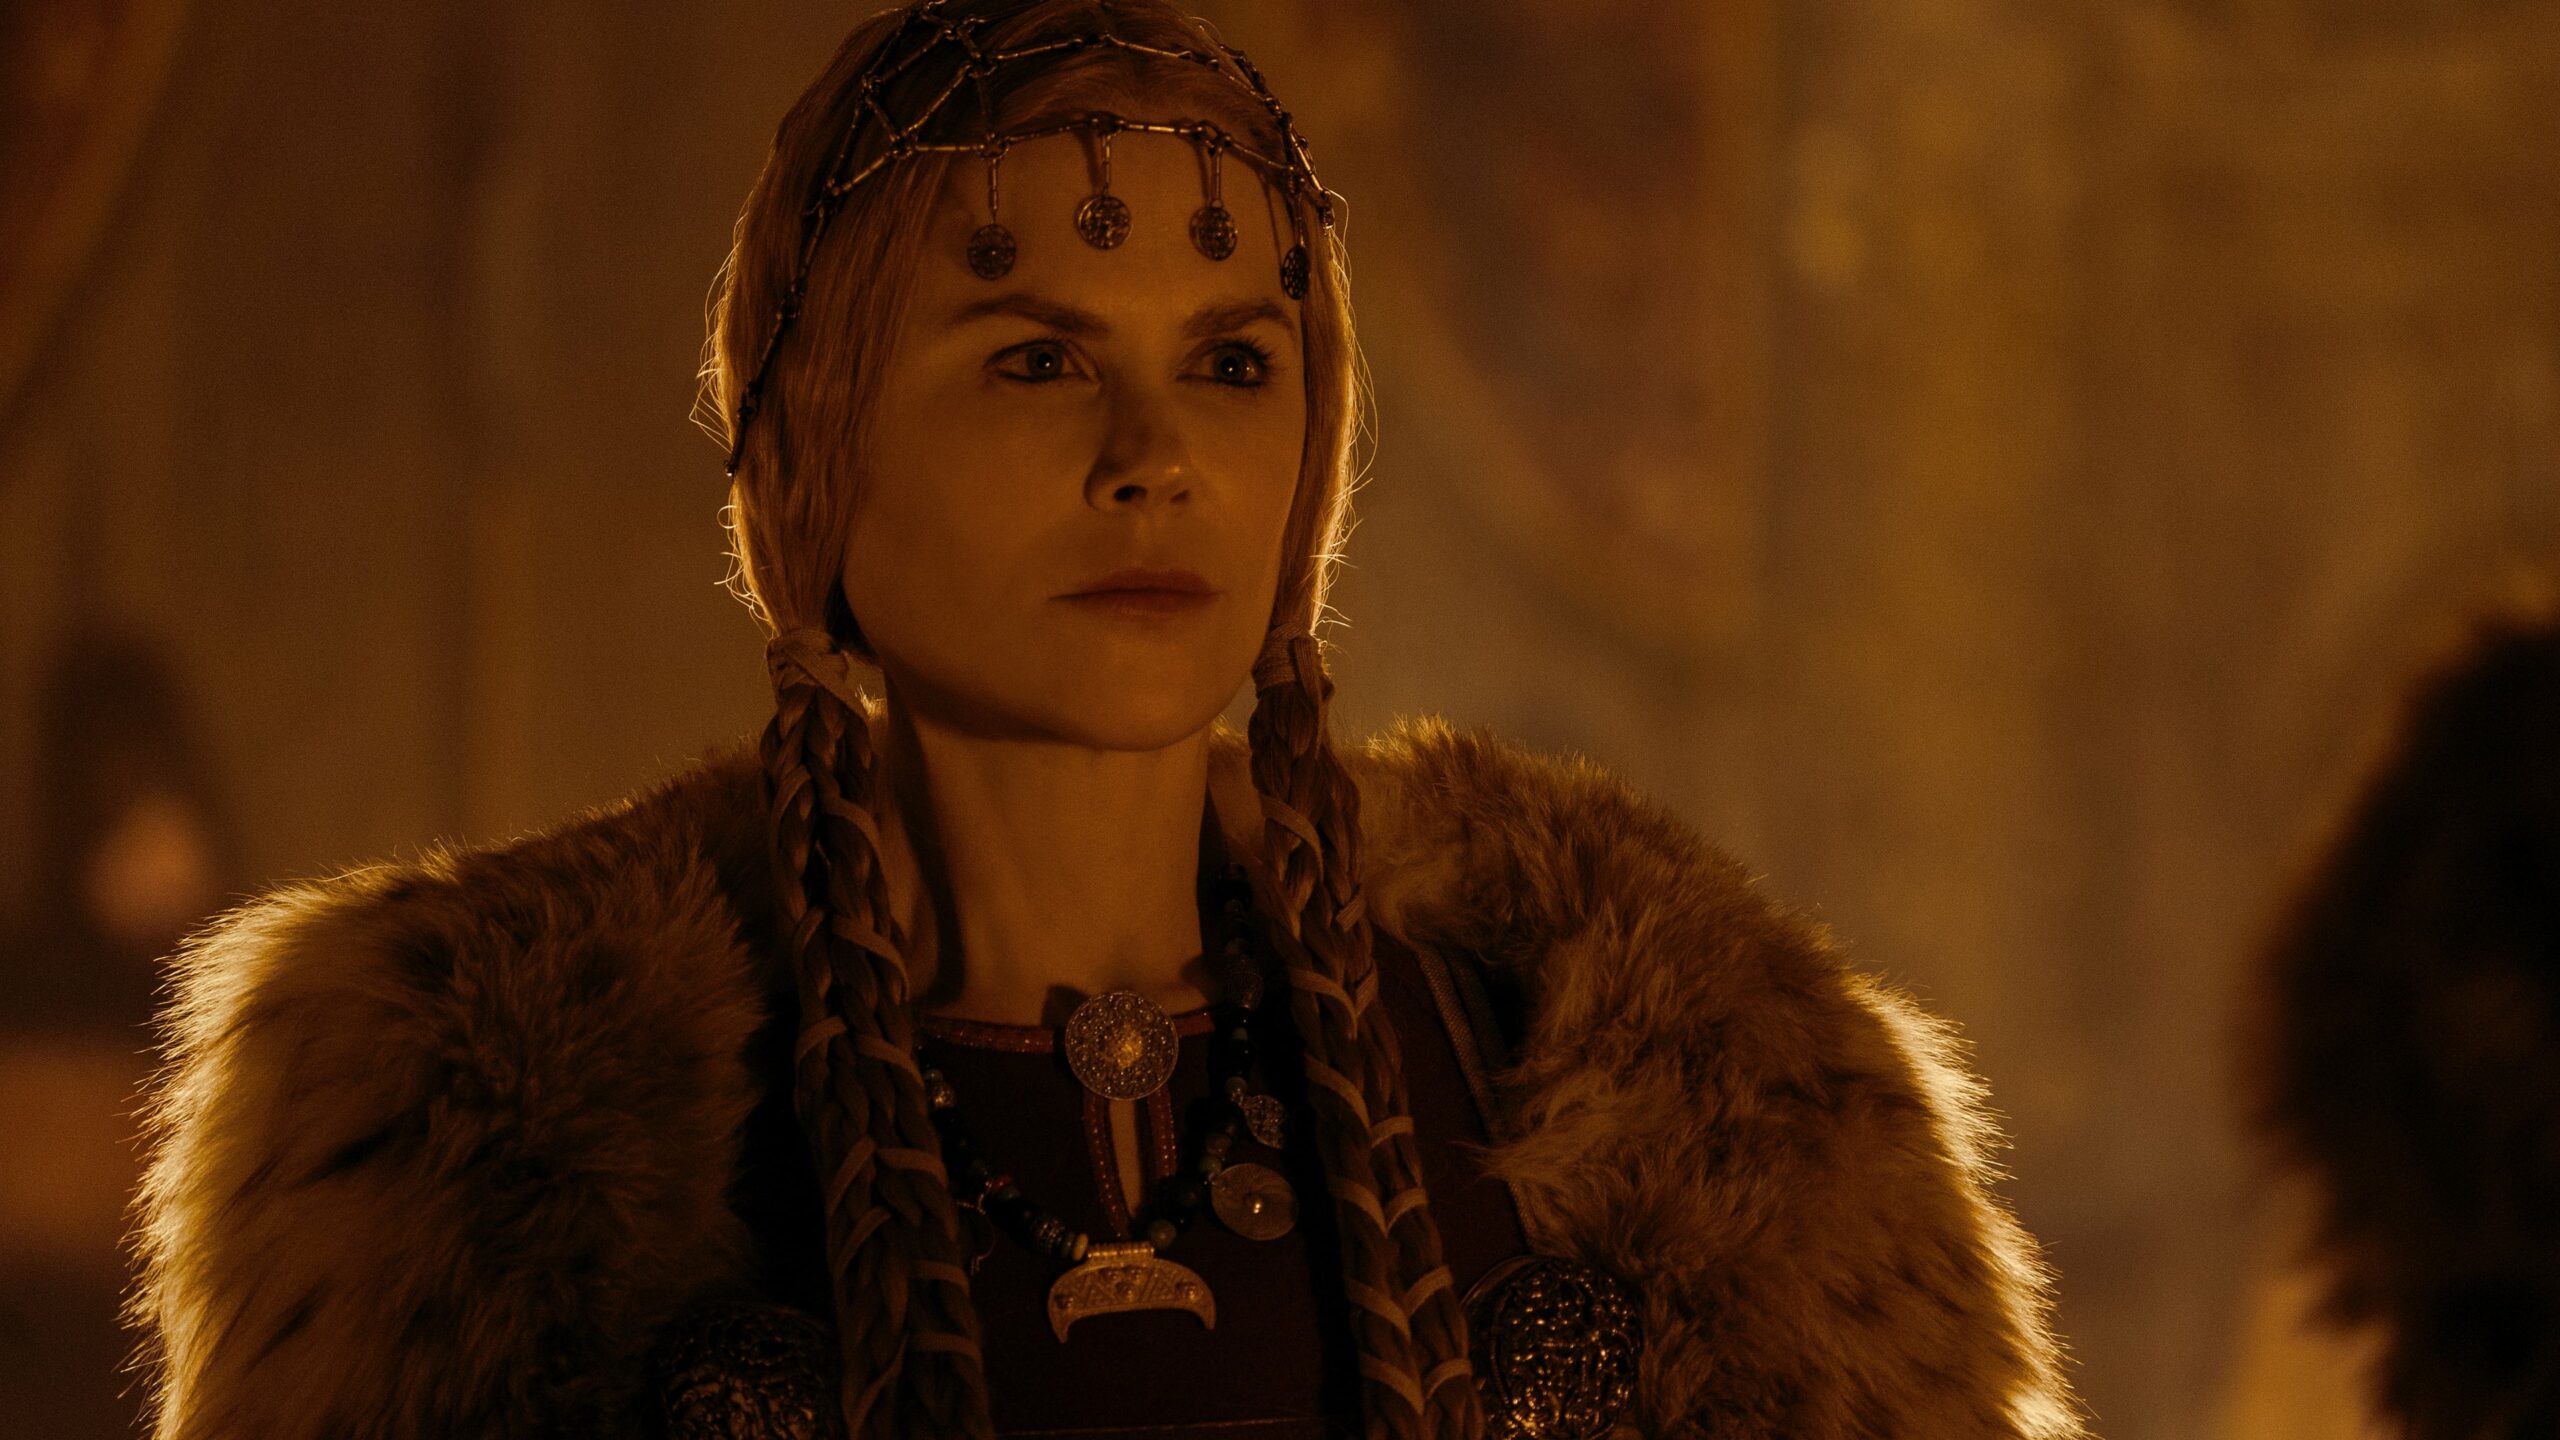 Nicole Kidman as Queen Gudrún plays an especially memorable part in the story